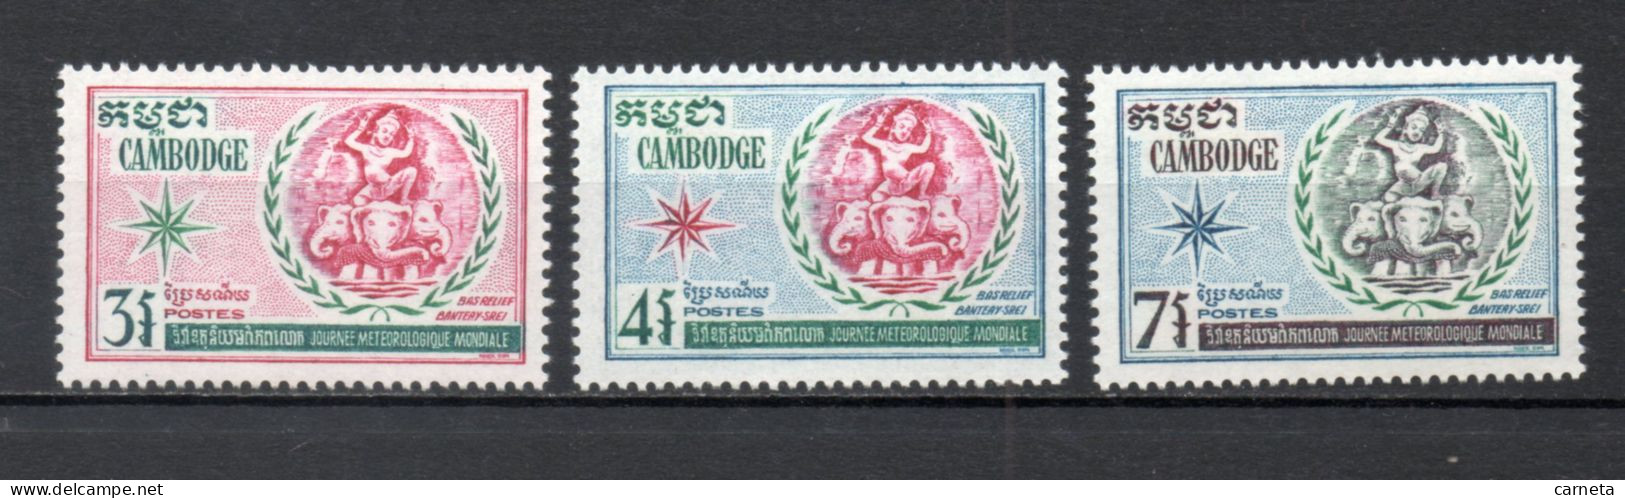 CAMBODGE  N° 249 à 251   NEUFS SANS CHARNIERE   COTE  2.00€    METEOROLOGIE - Cambodia